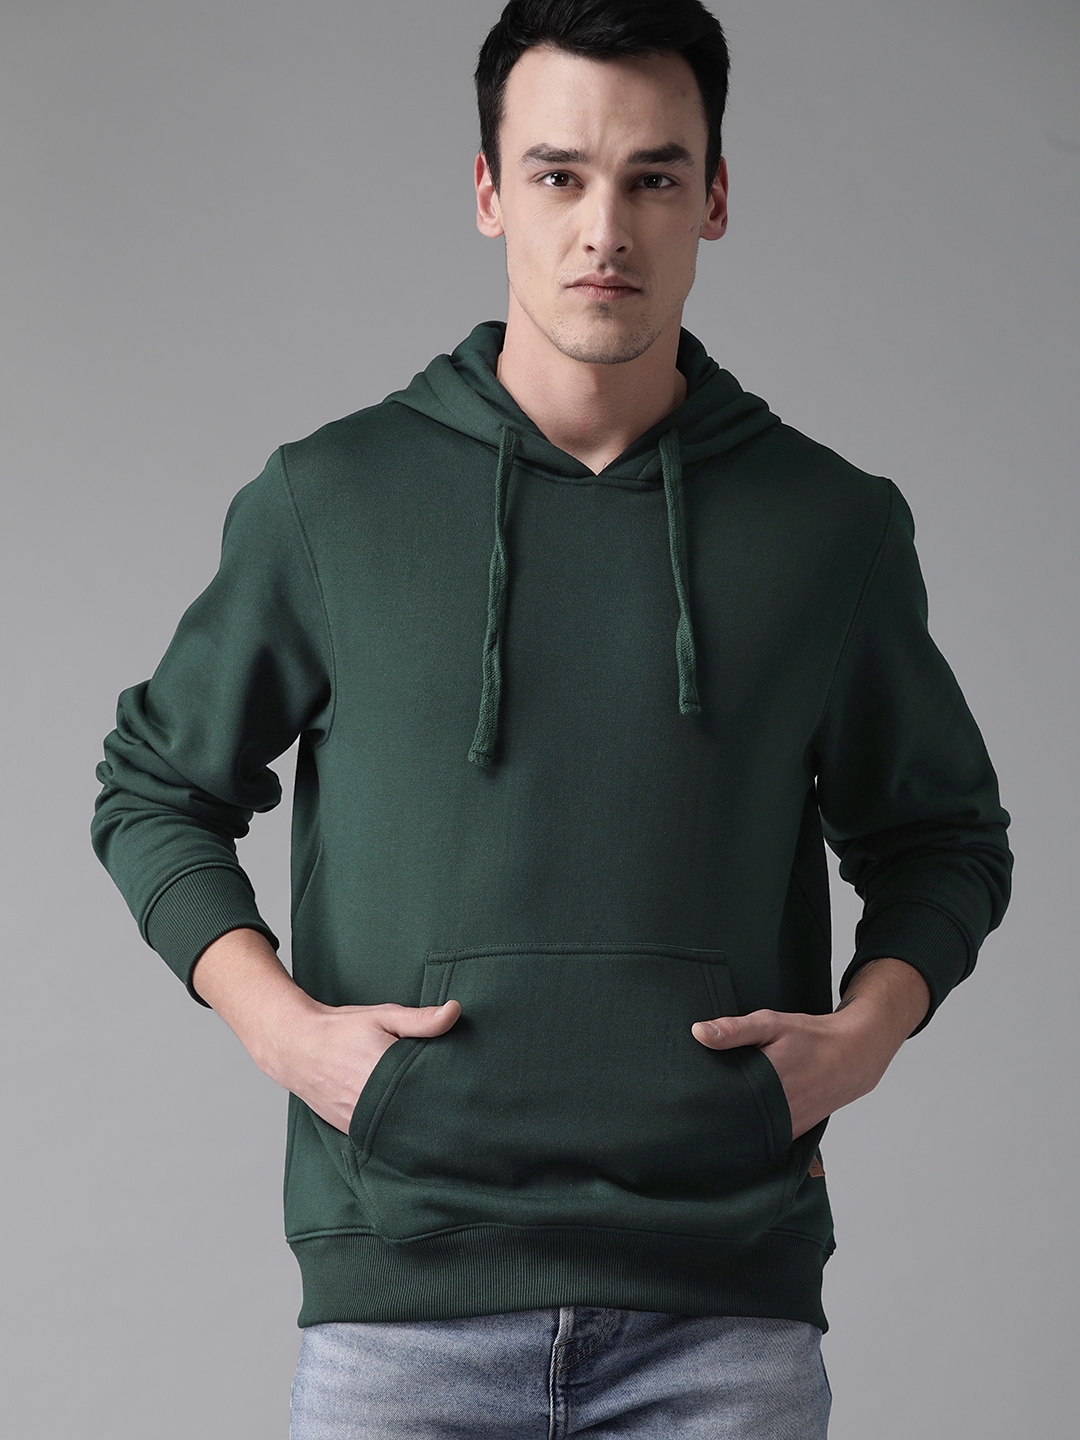 Buy The Roadster Lifestyle Co Men Green Solid Hooded Sweatshirt ...